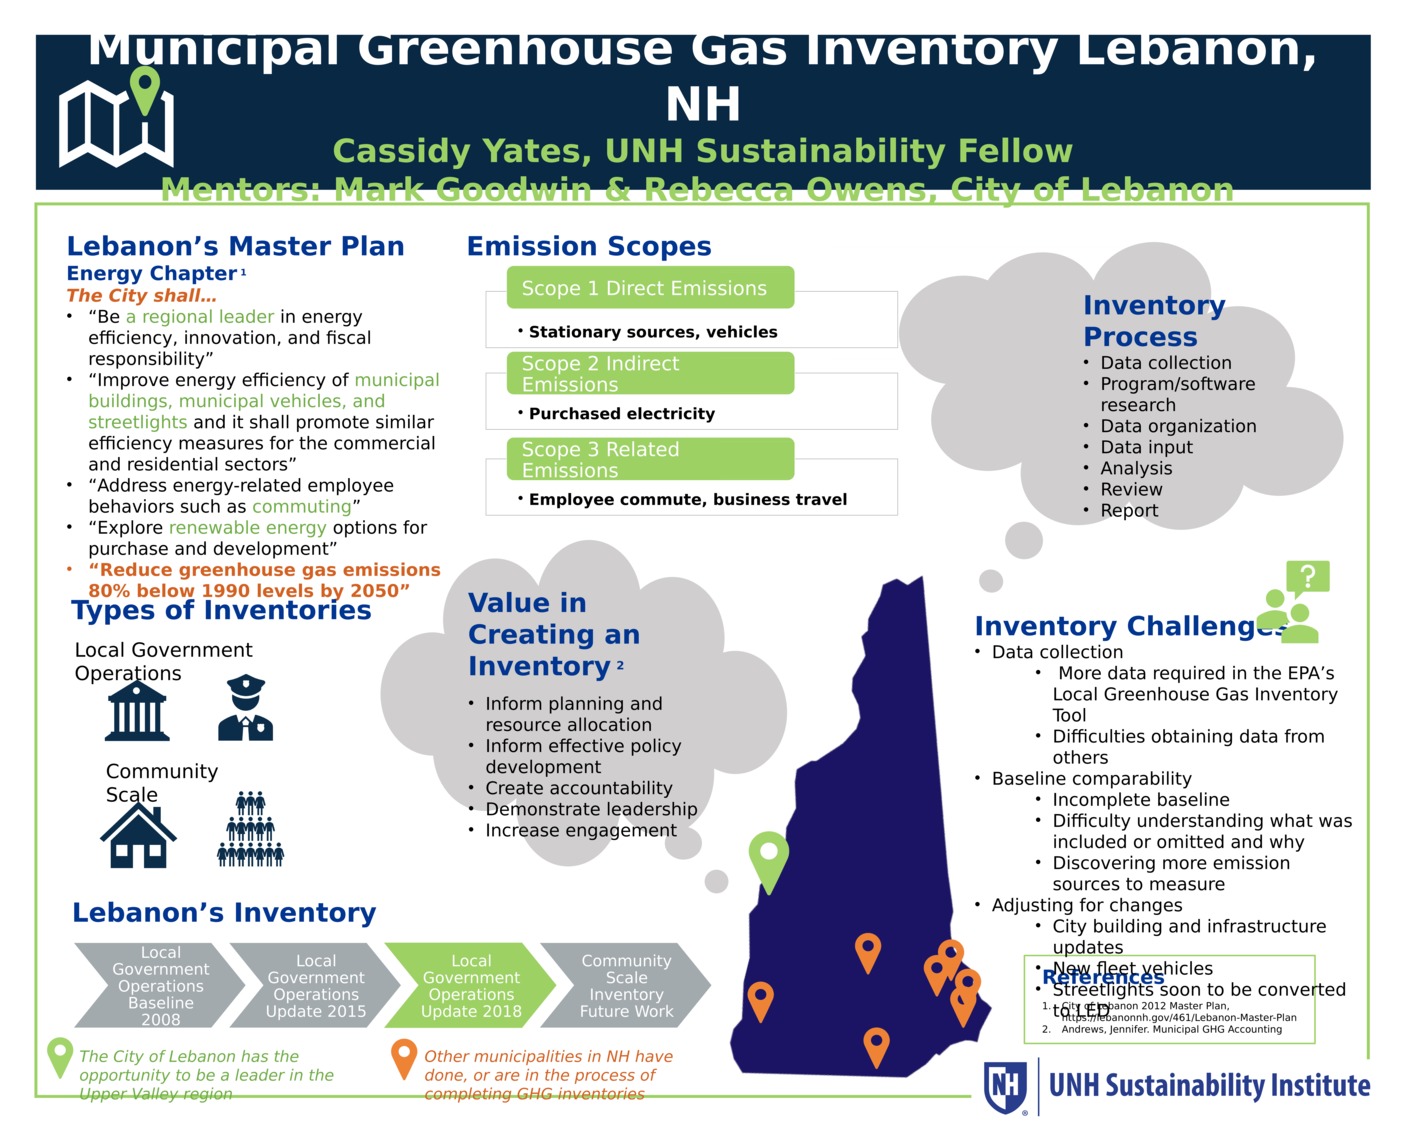 Municipal Greenhouse Gas Inventory Lebanon, Nh by cry1004